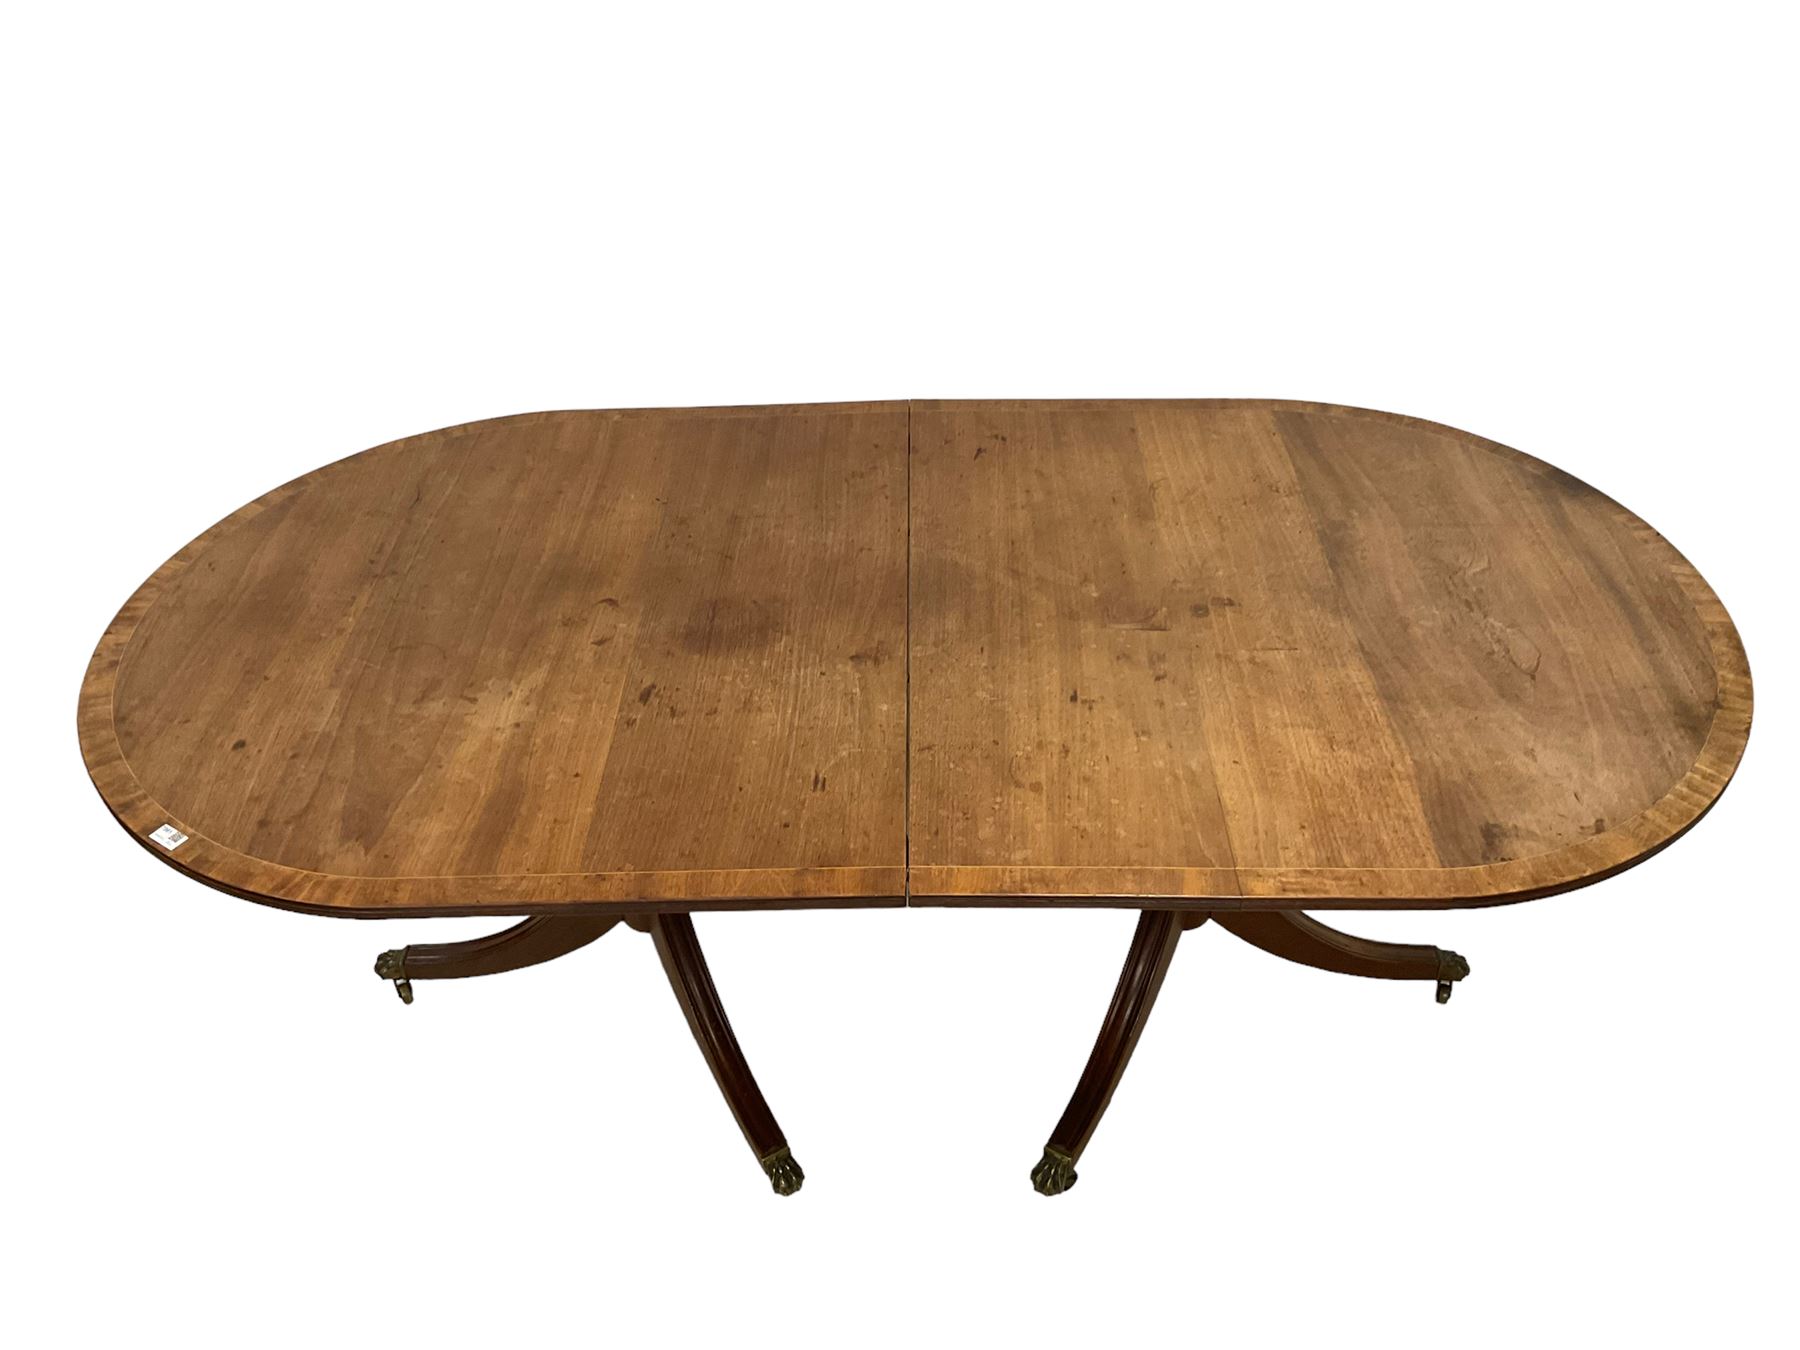 Regency design mahogany twin pedestal dining table - Image 4 of 6